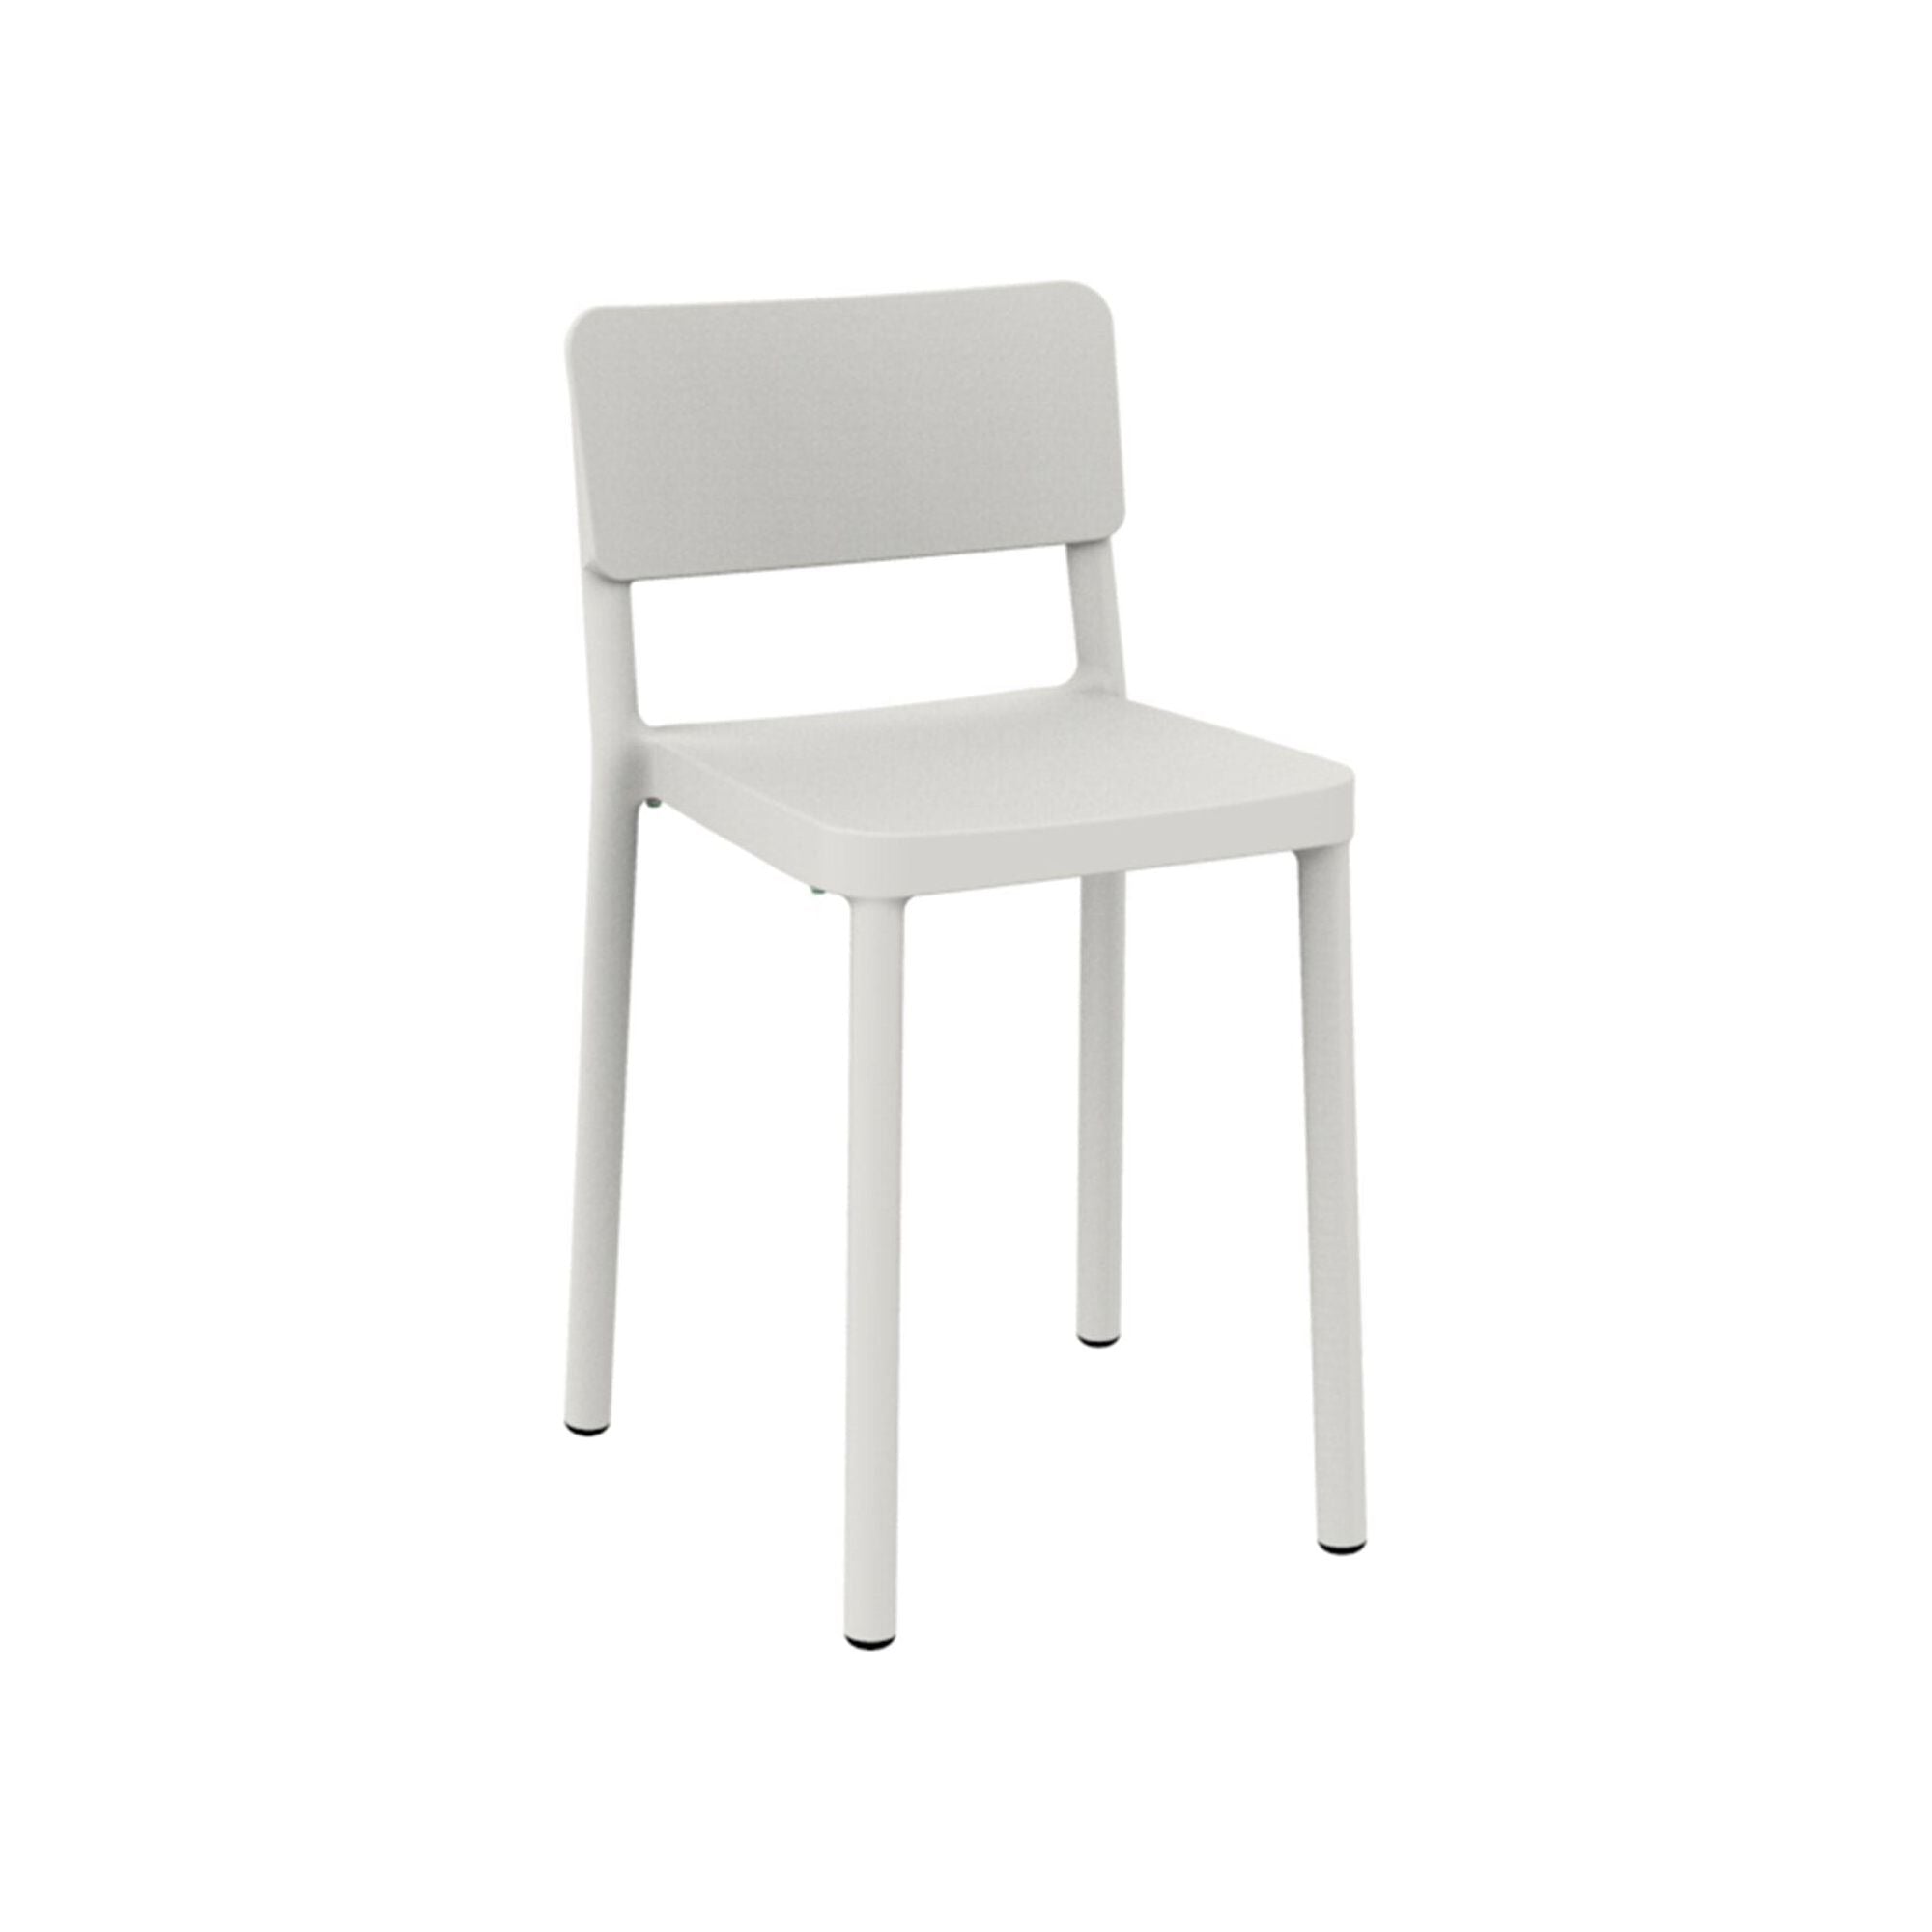 Resol lisboa low chair inside, white outside